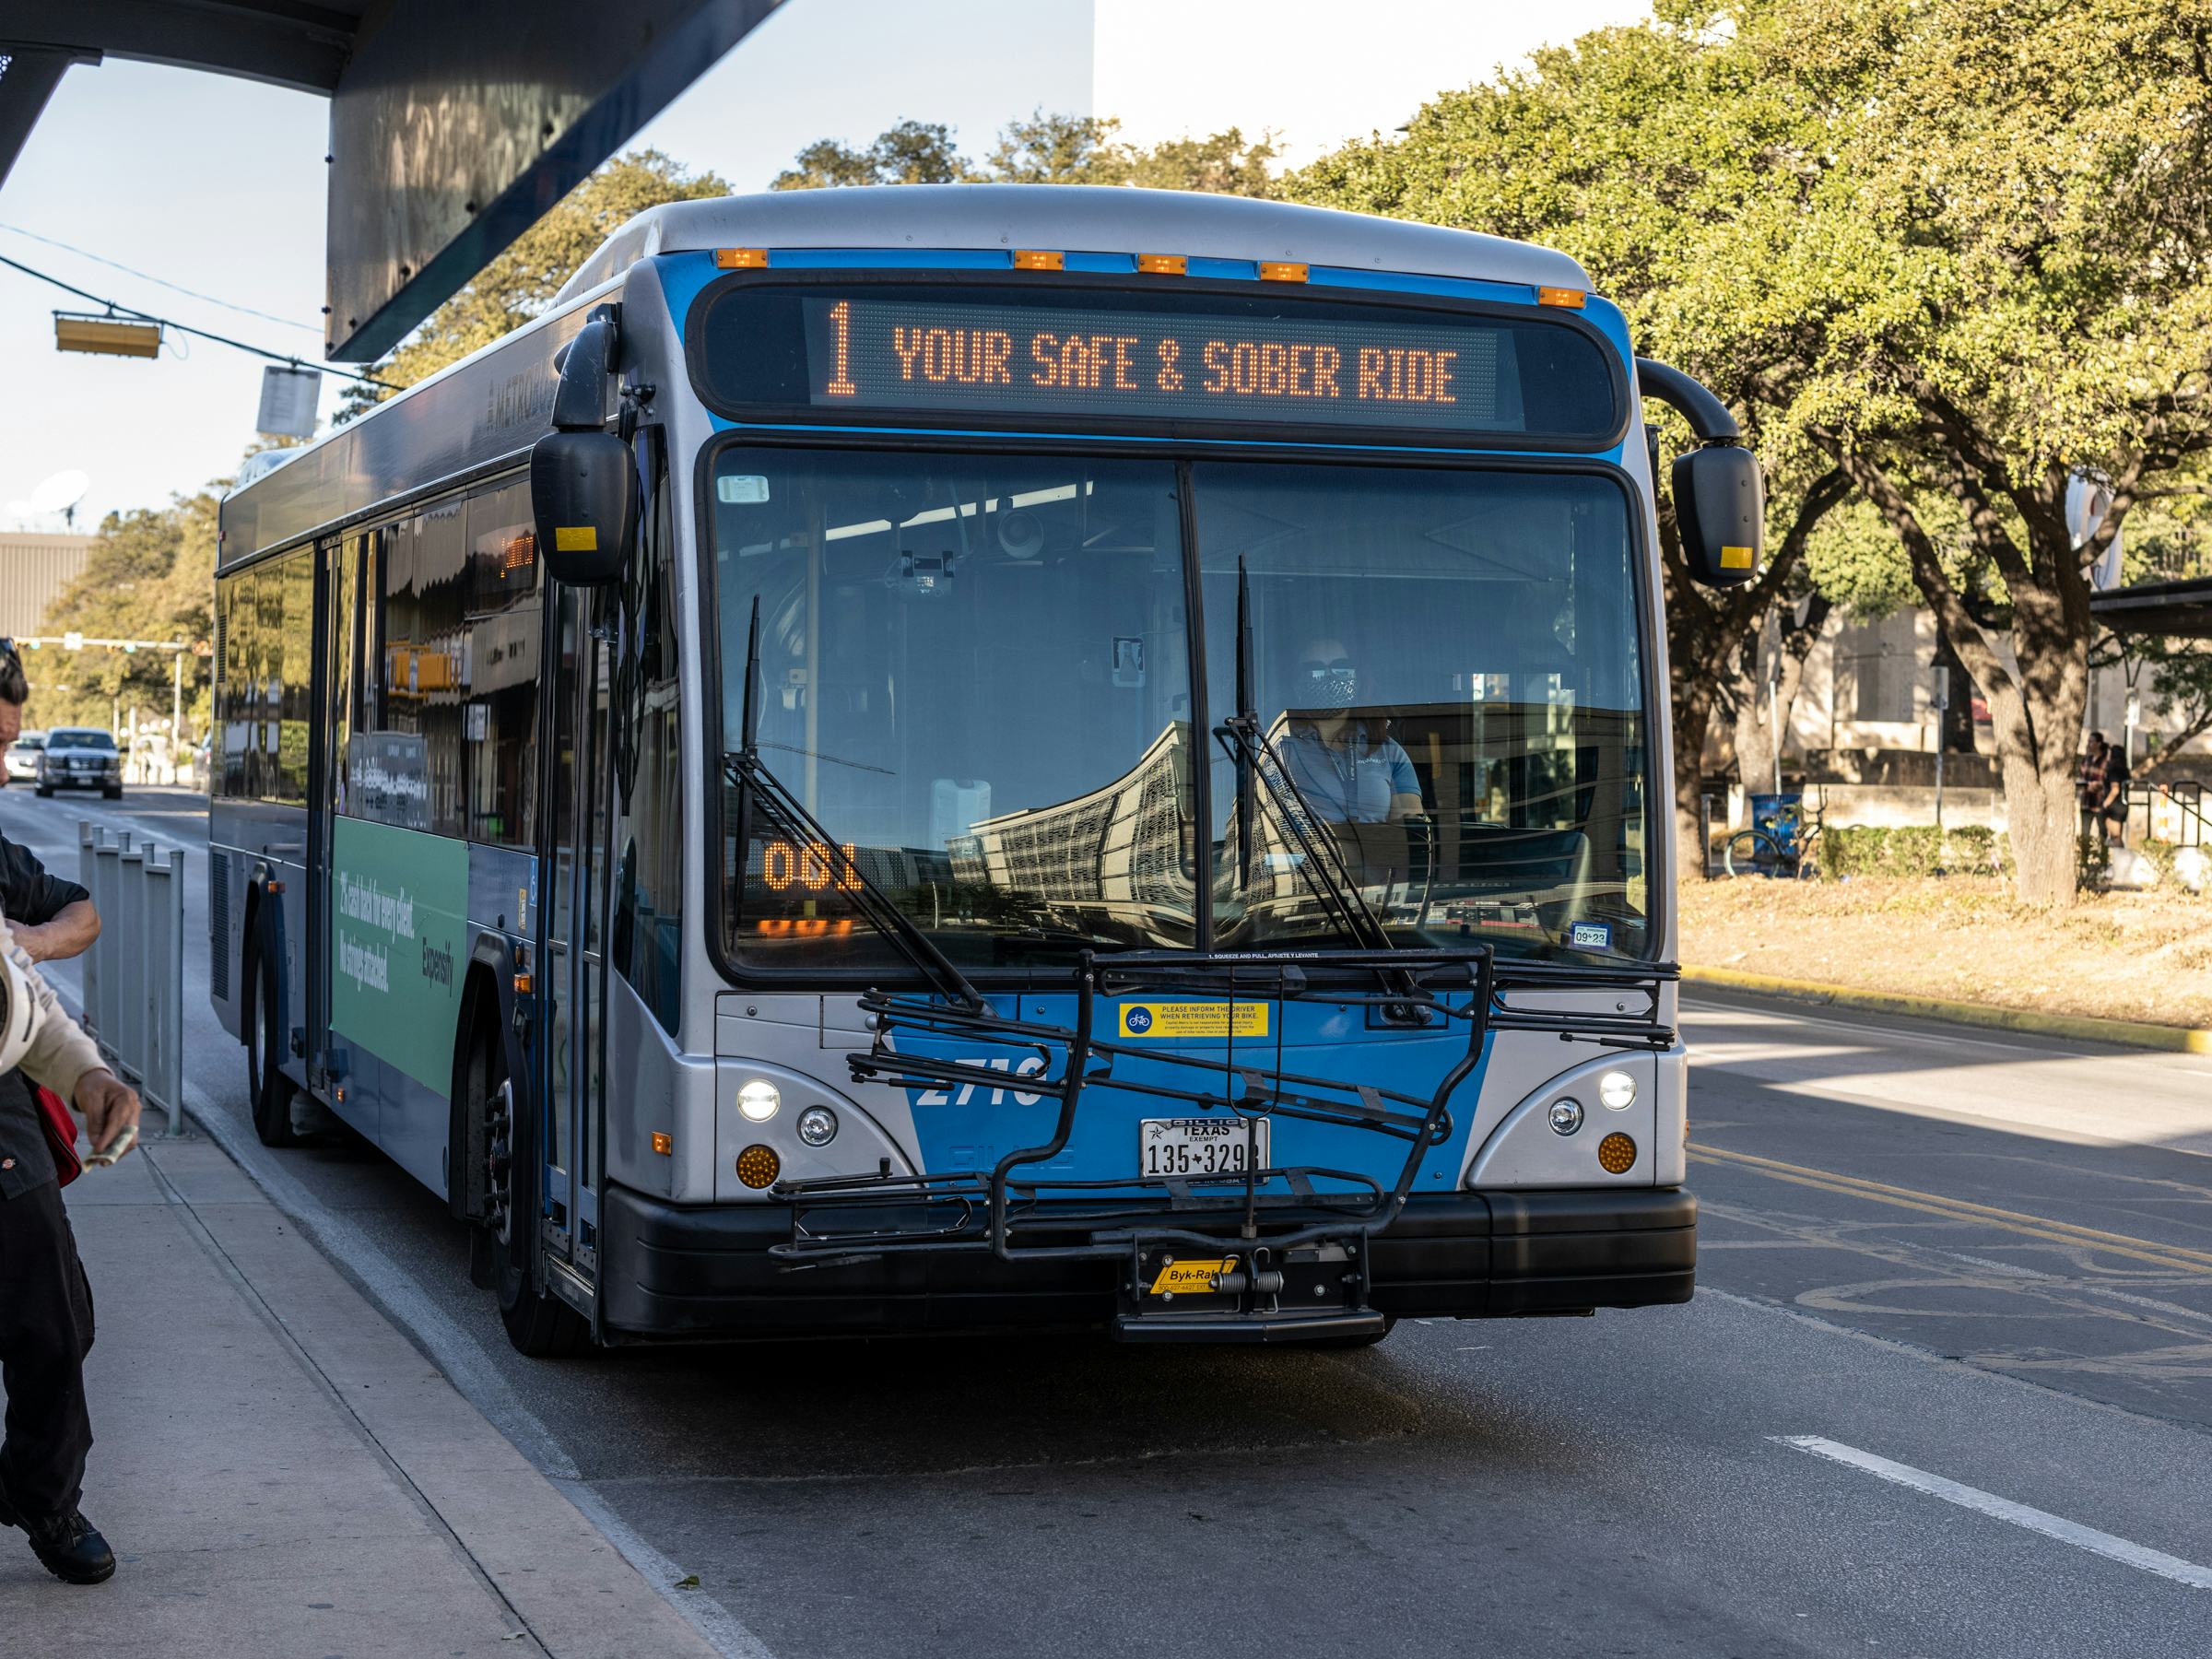 A blue Austin Metro bus approaches the viewer